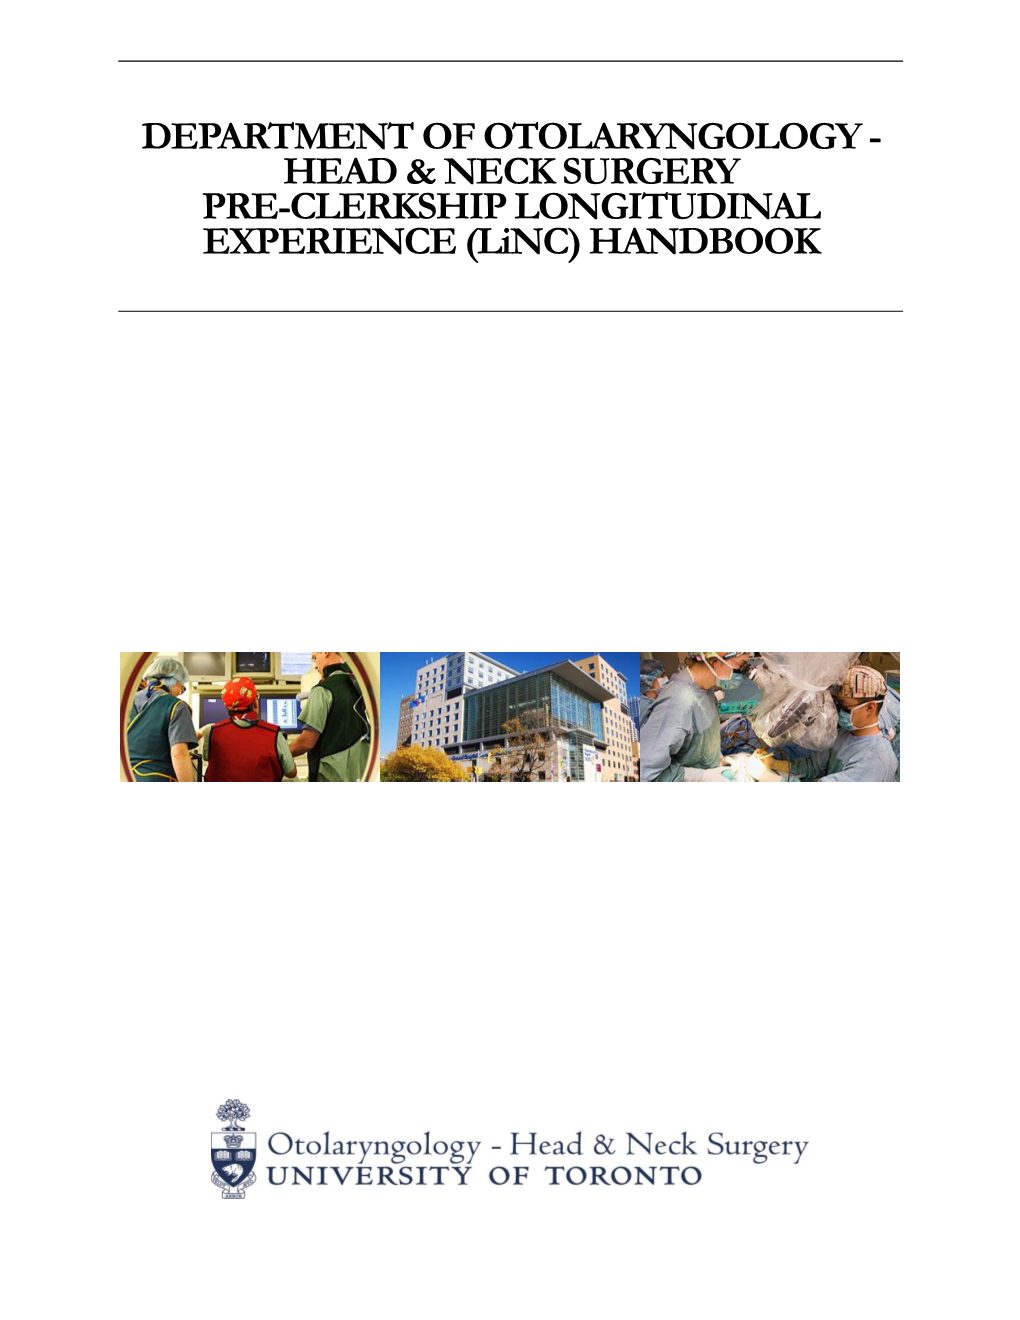 DEPARTMENT of OTOLARYNGOLOGY - HEAD & NECK SURGERY PRE-CLERKSHIP LONGITUDINAL EXPERIENCE (Linc) HANDBOOK